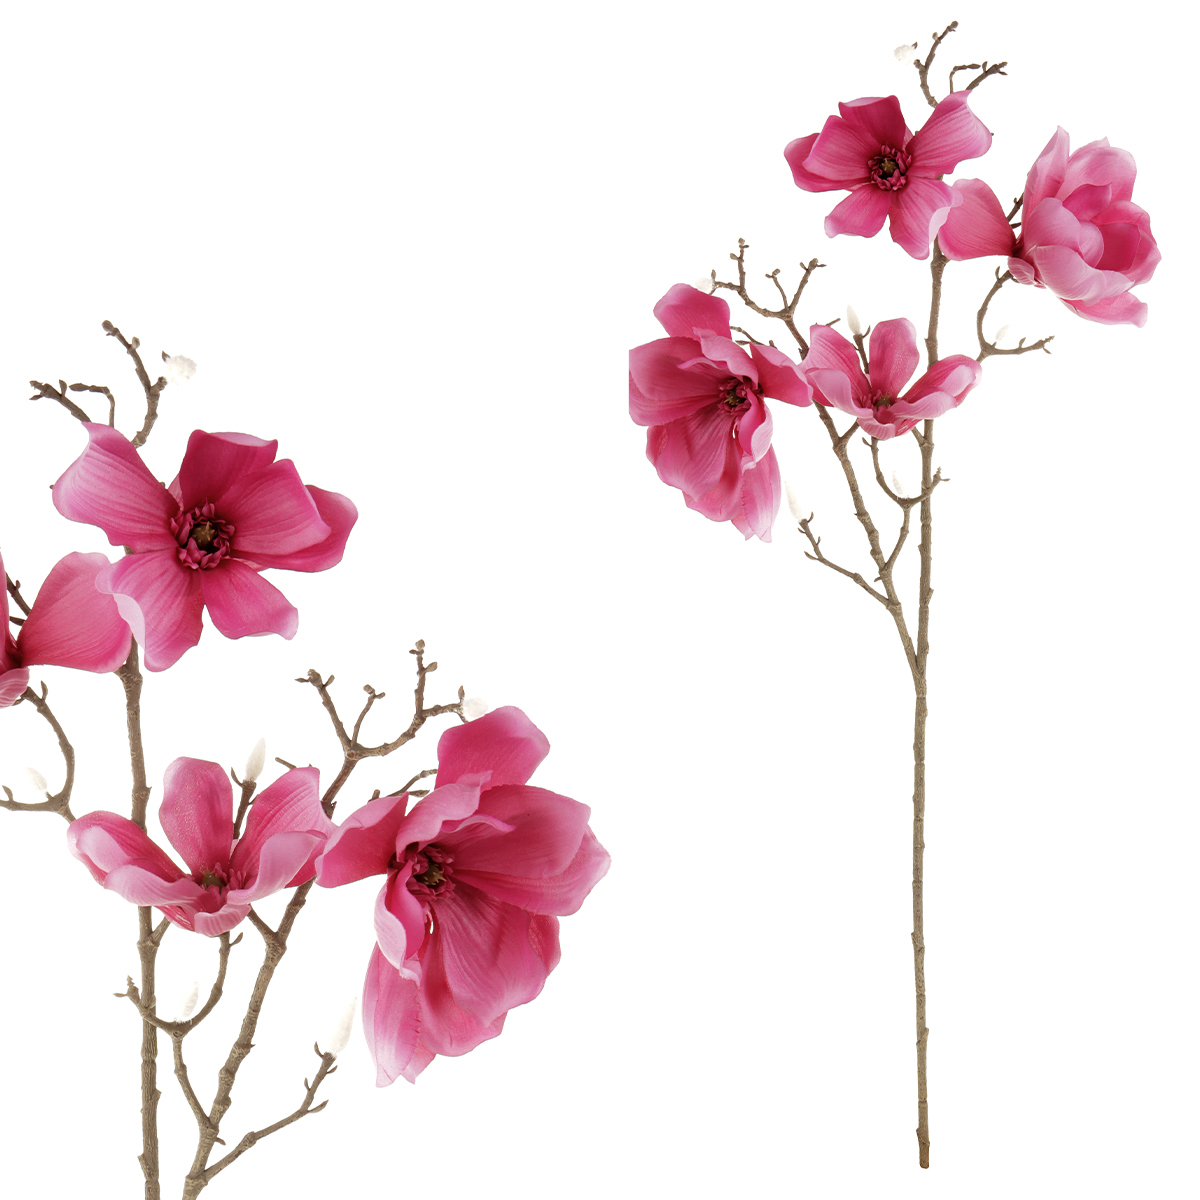 Magnolie, 4 květy, tm.růžová barva.